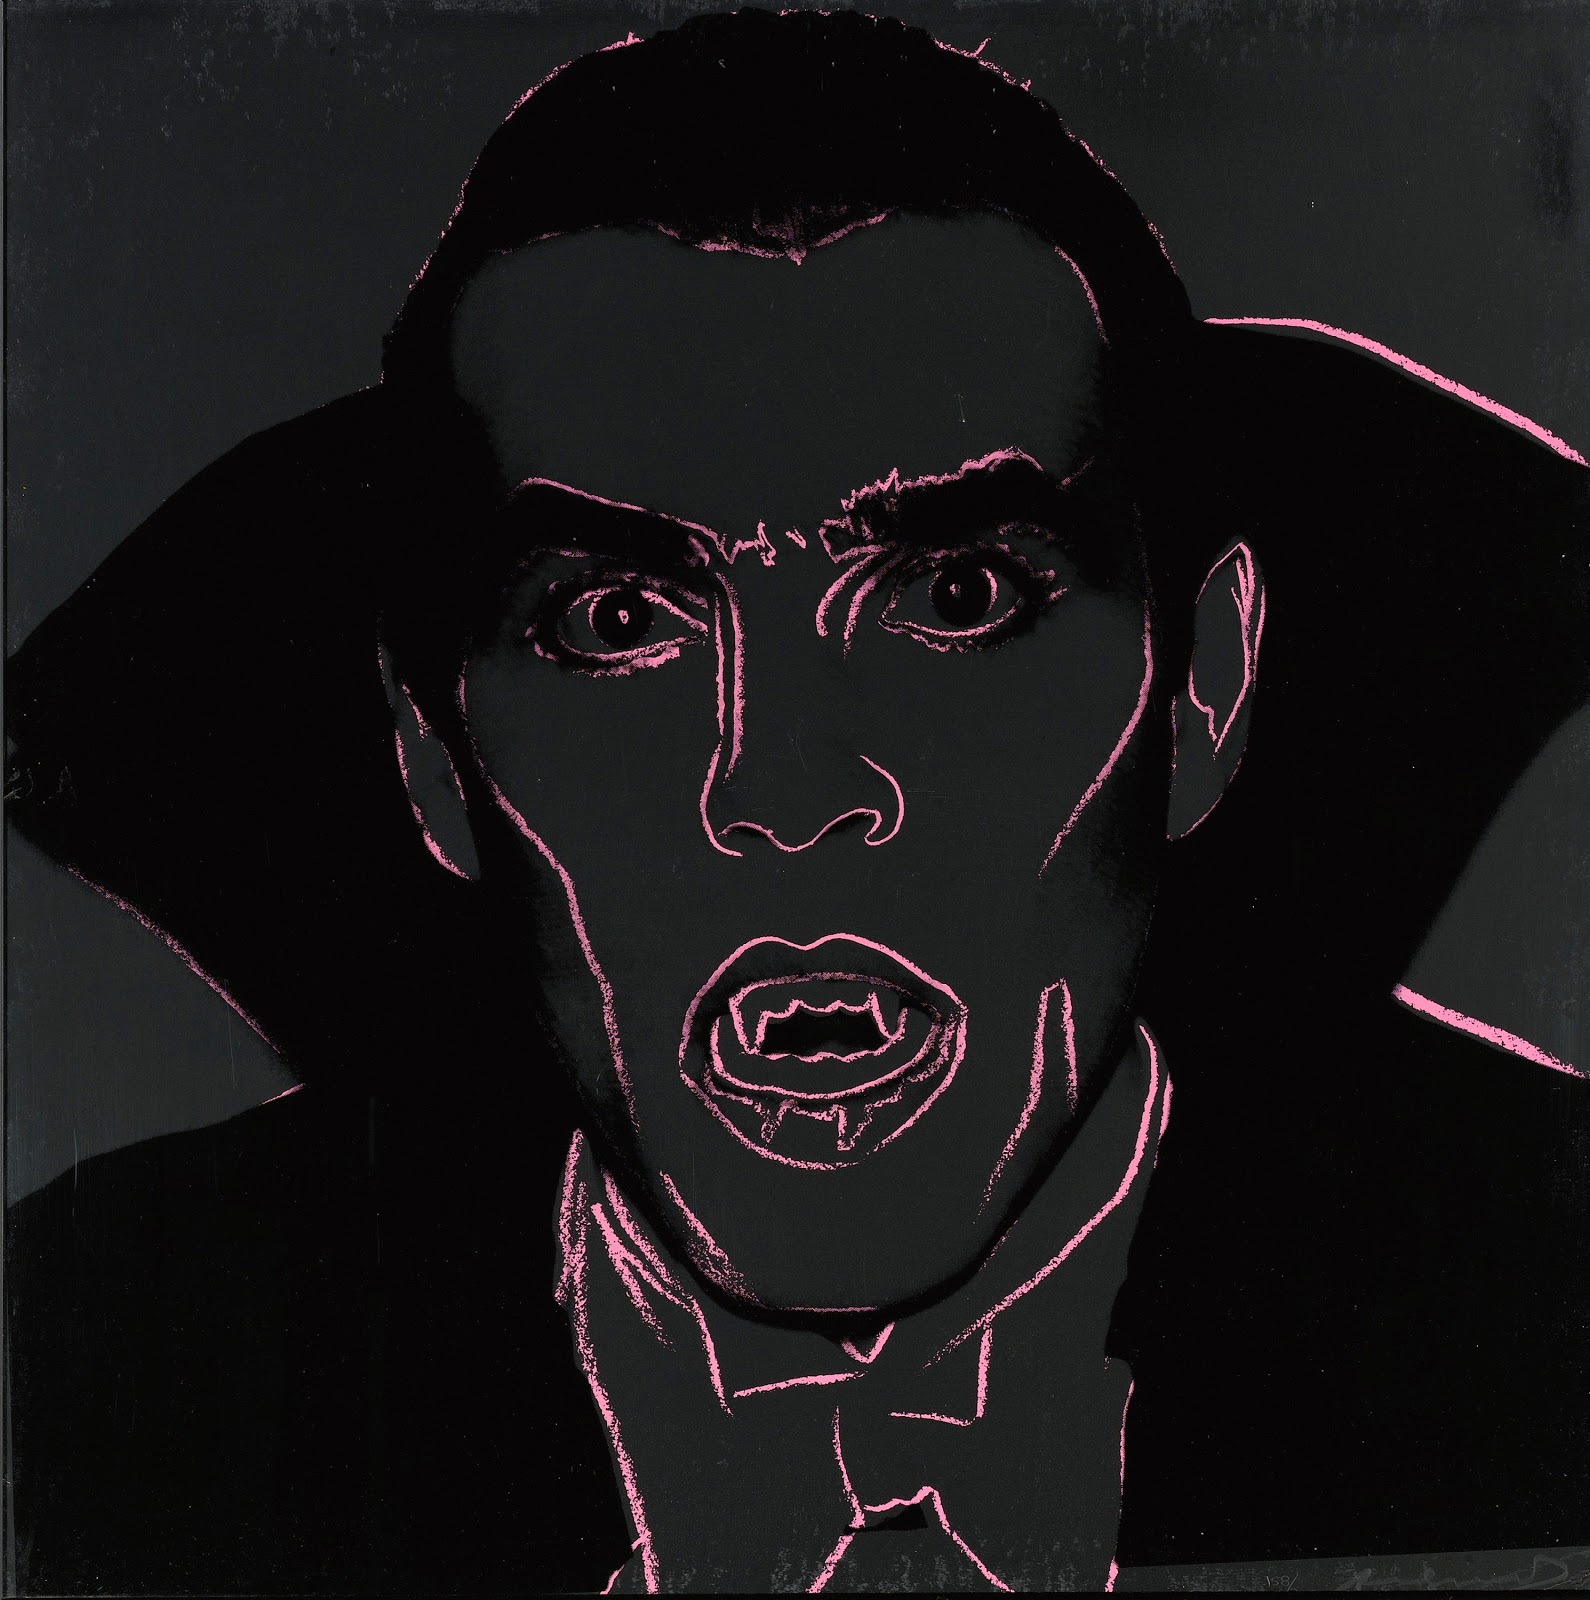 Andy+Warhol-1928-1987 (38).jpg